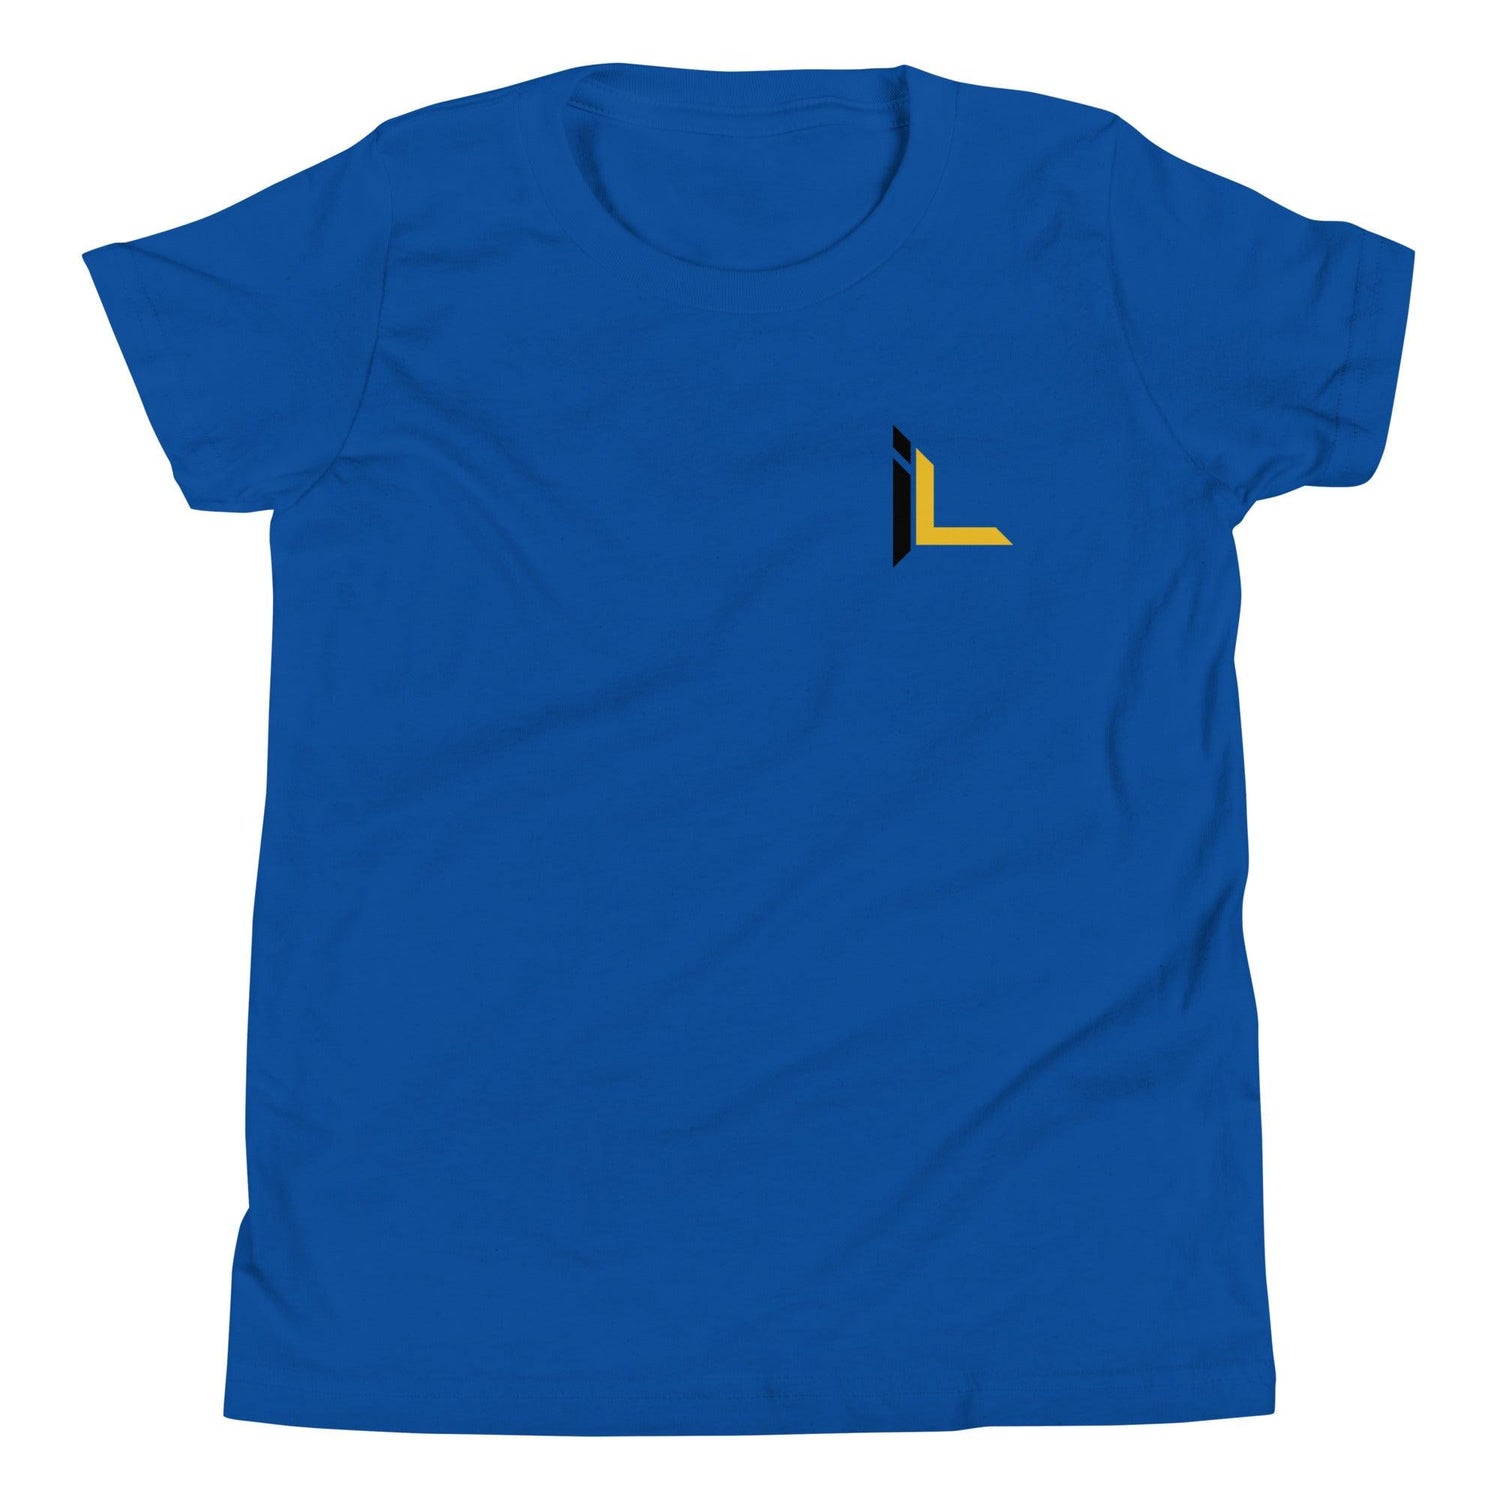 Isaiah Landry "Essential" Youth T-Shirt - Fan Arch